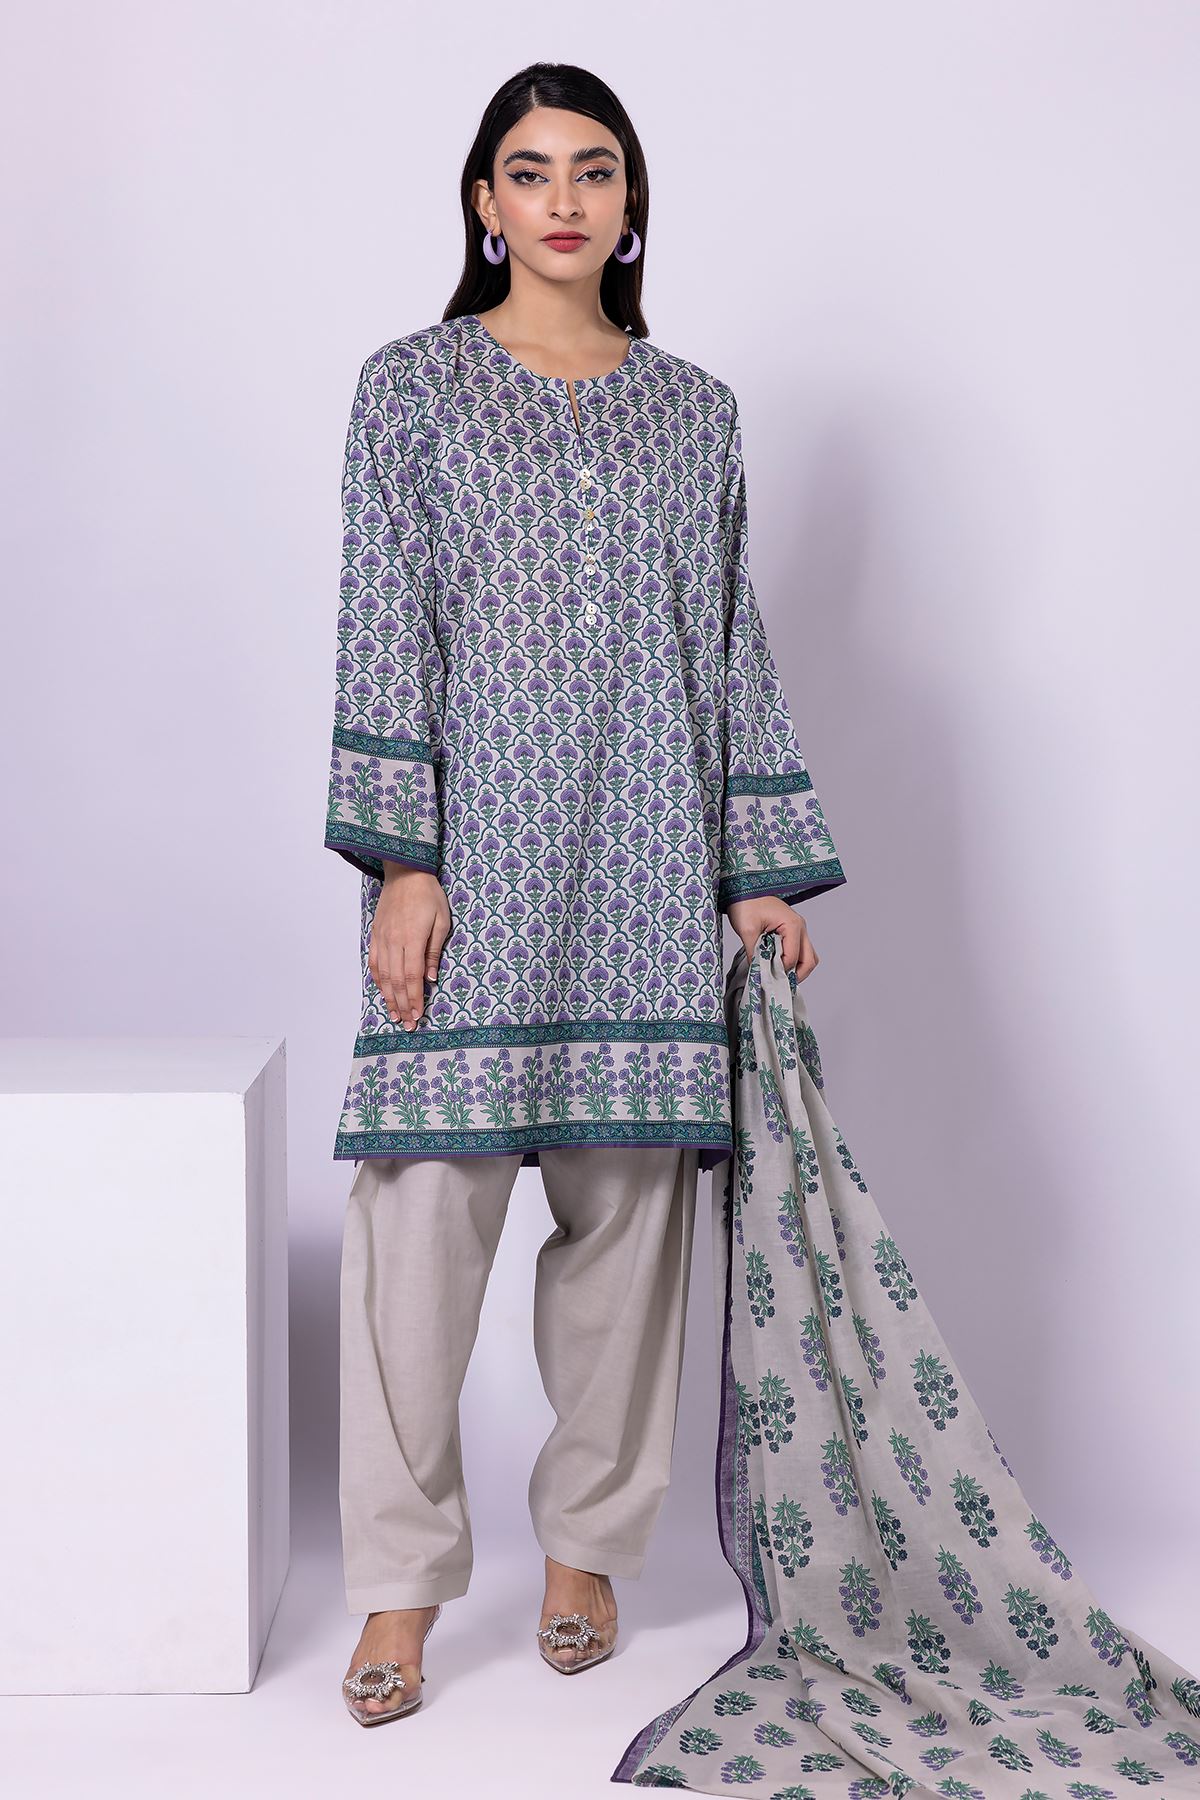 Buy Fabrics 3 Piece Suit | 8.40 USD | 1001757439 | Khaadi Global